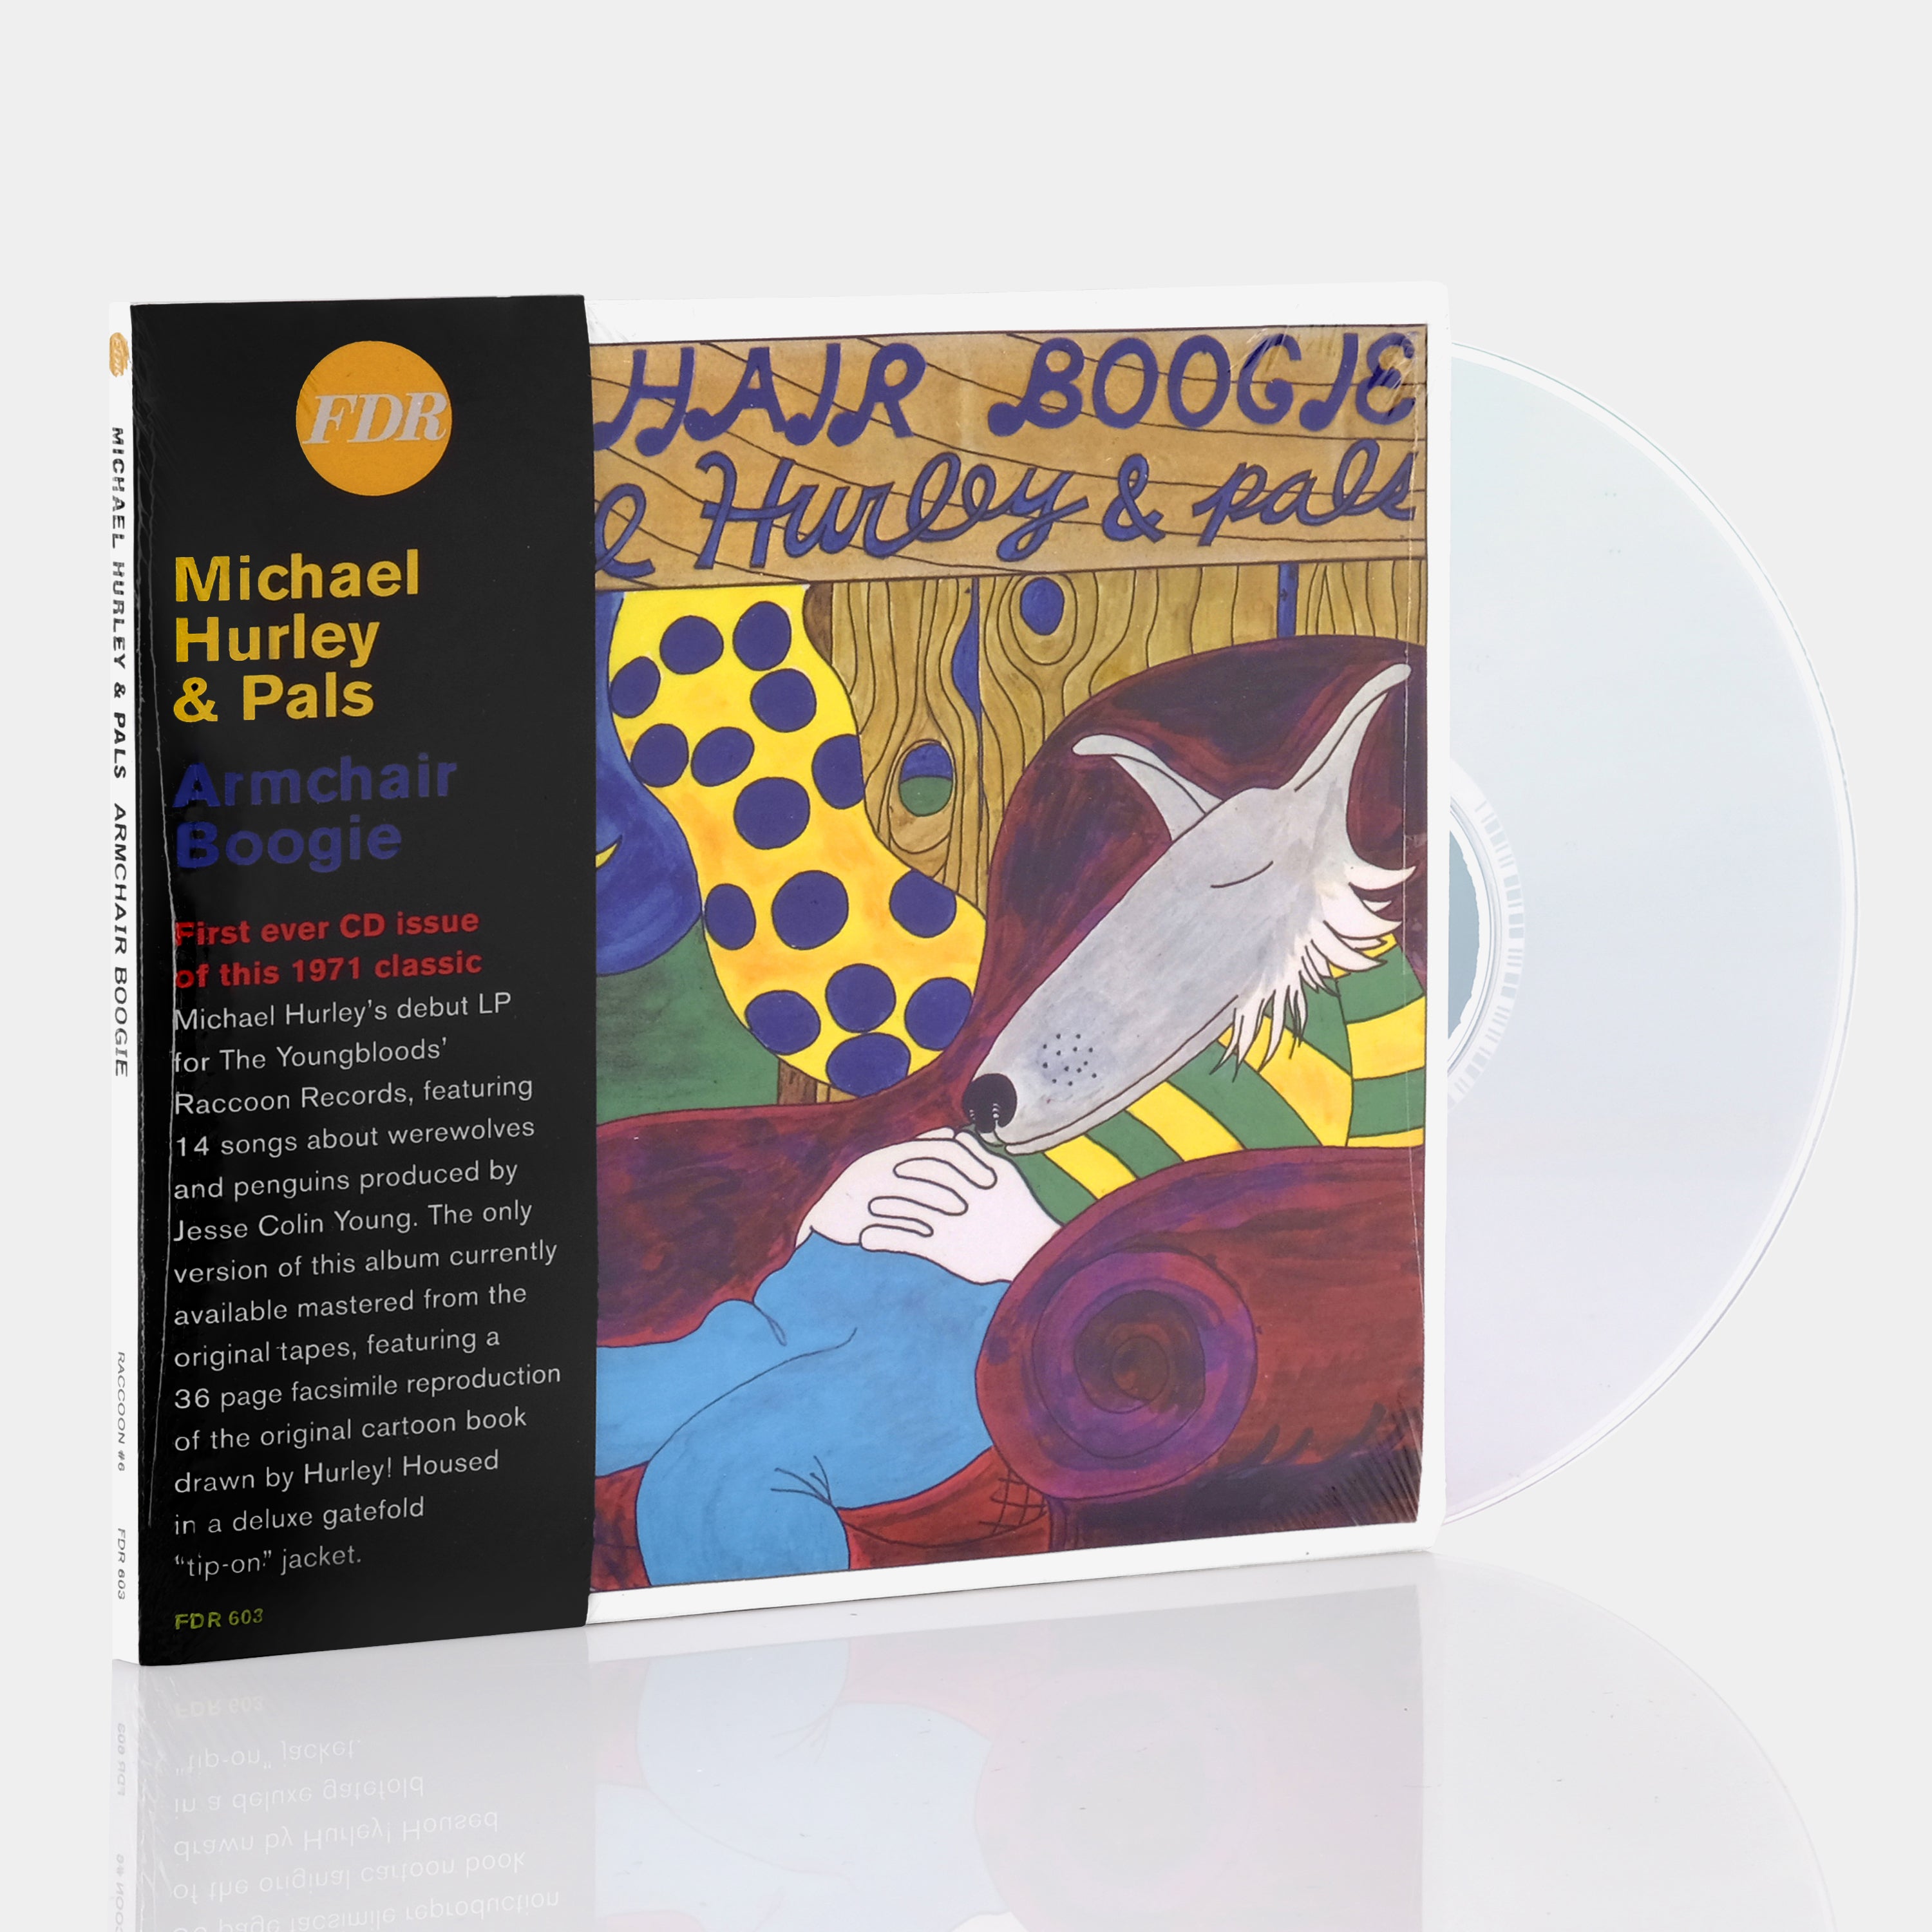 Michael Hurley & Pals - Armchair Boogie CD